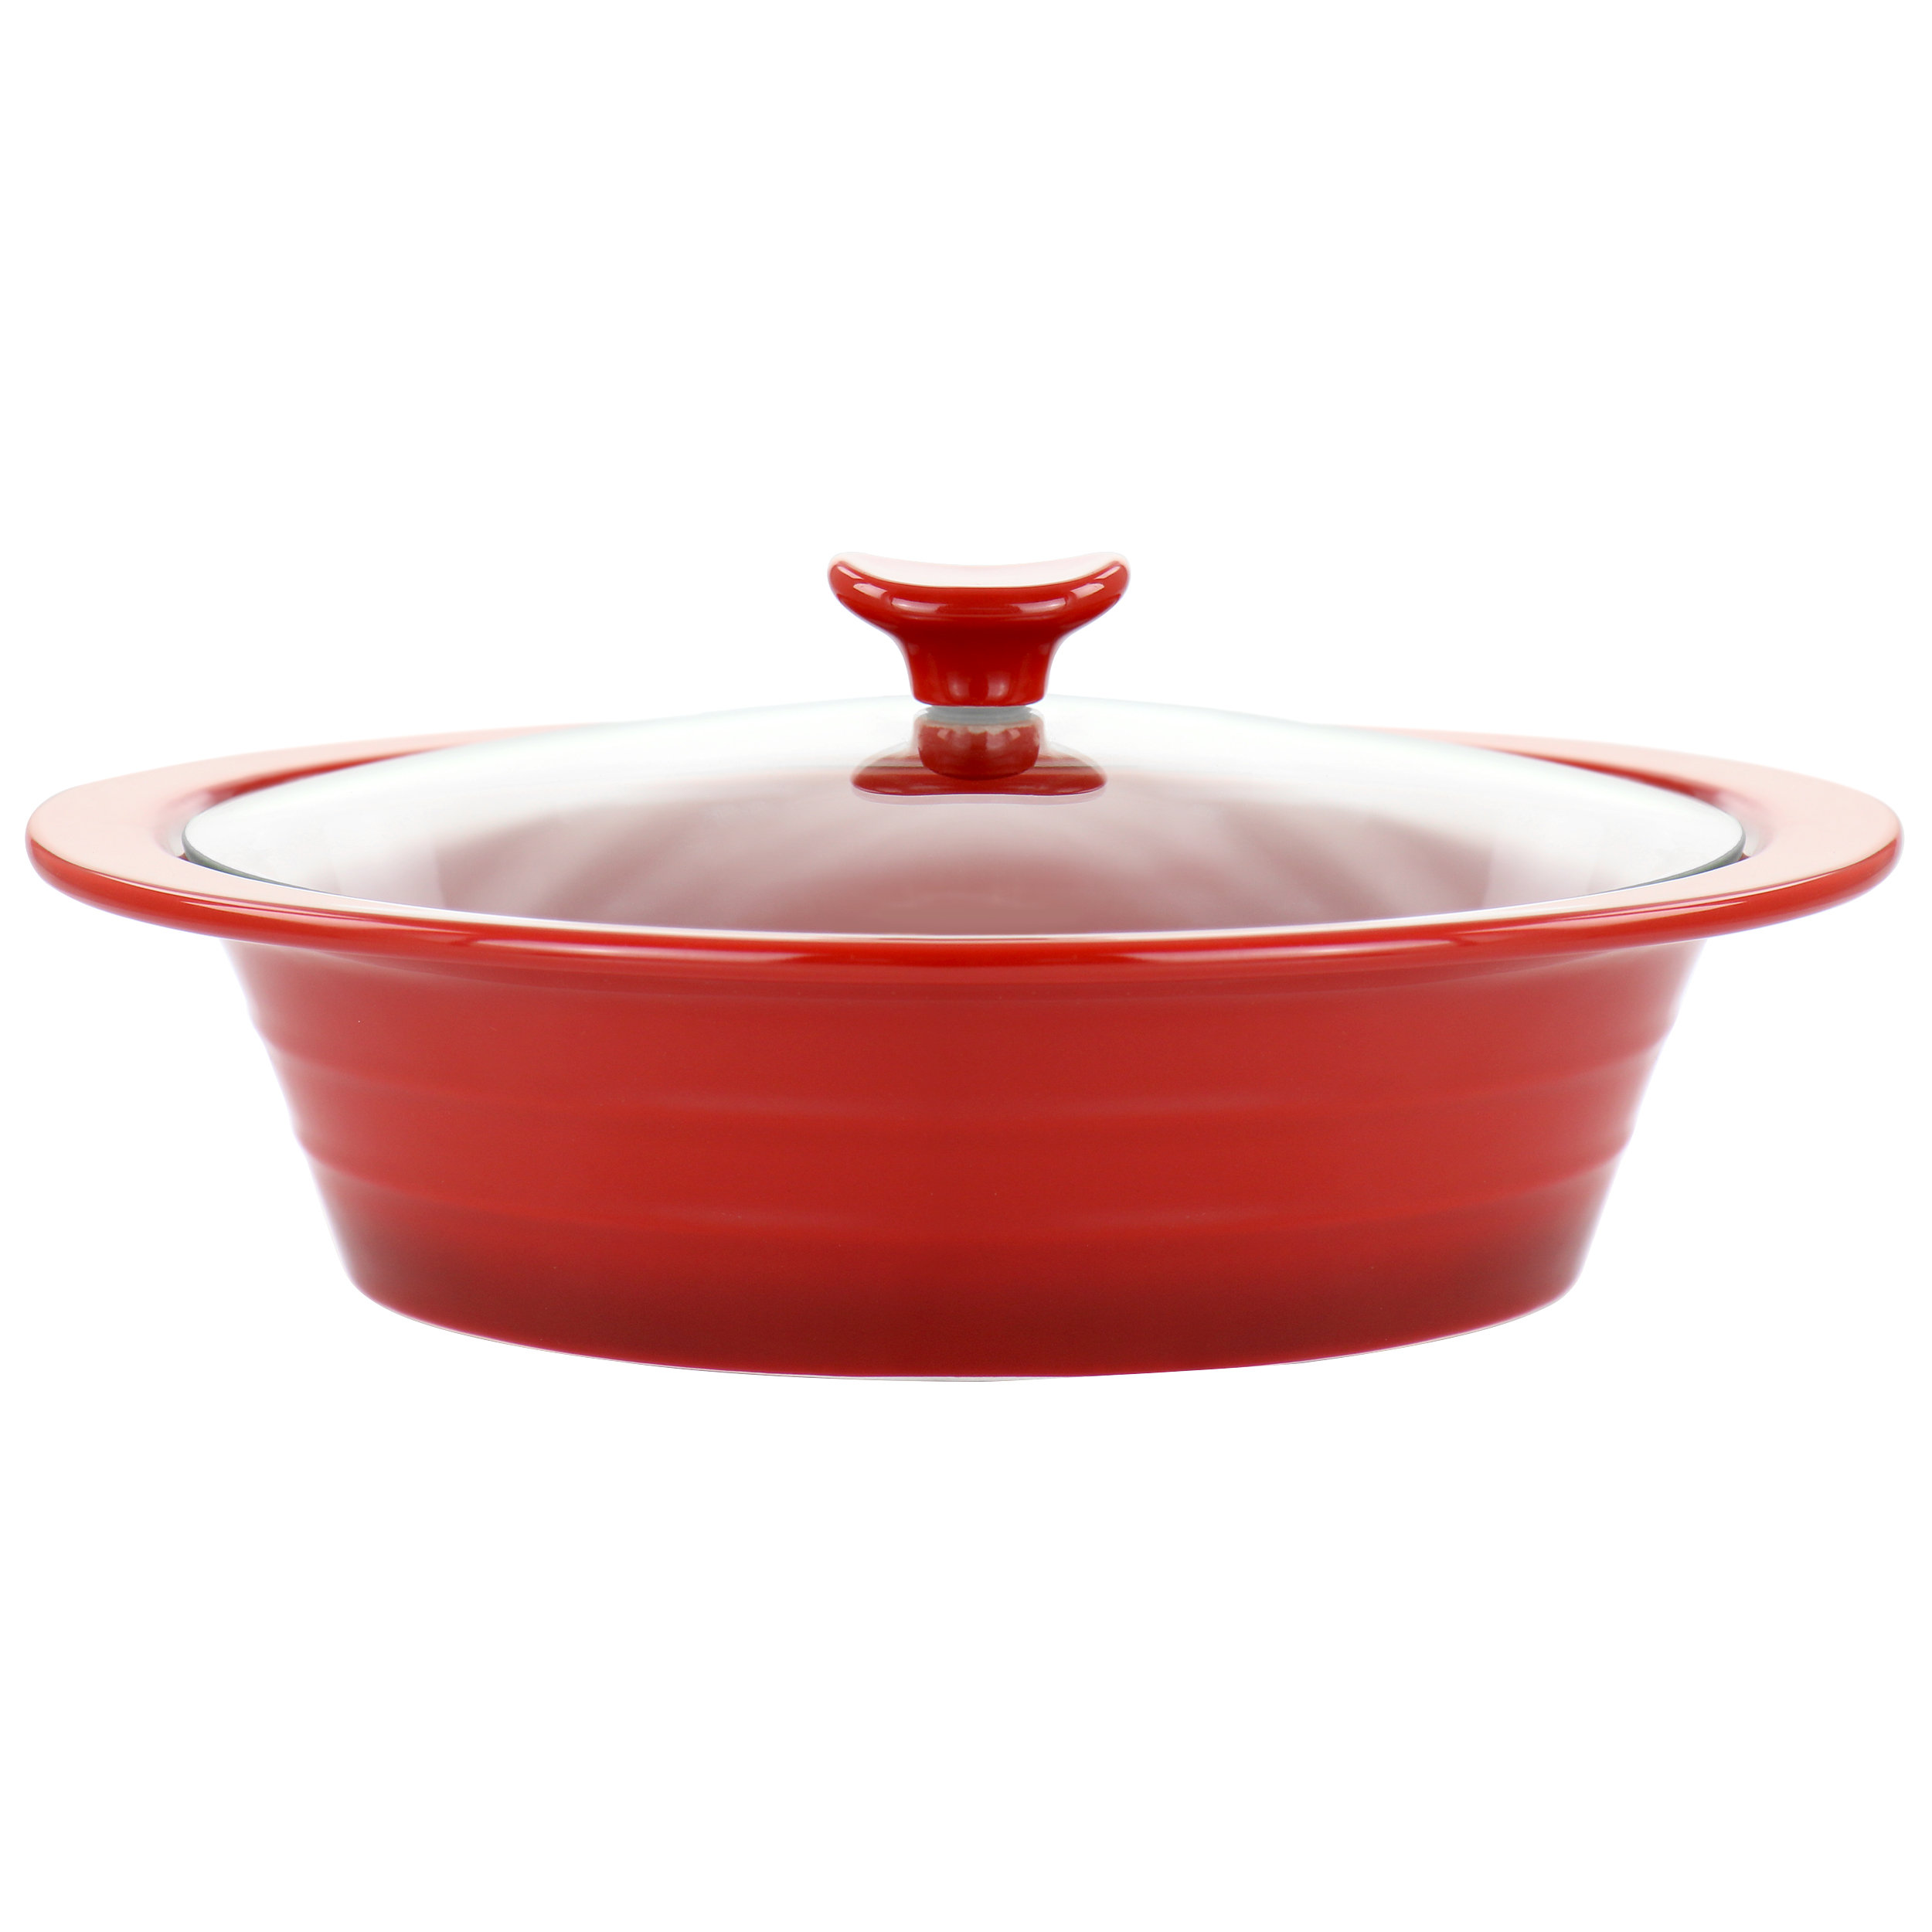 Crock Pot 2-Piece Gradient Red Artisan Ceramic Bakeware Set